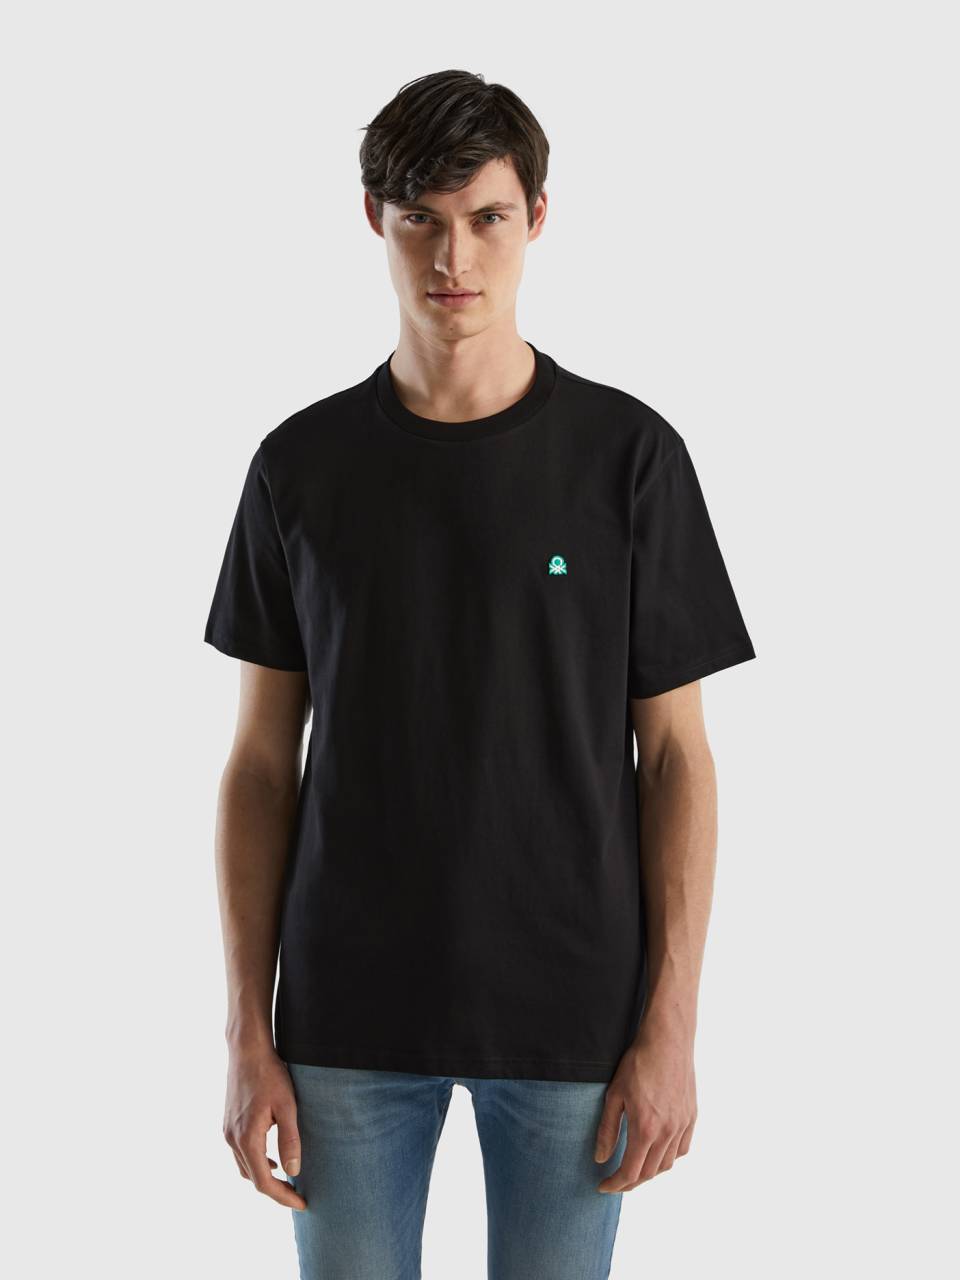 100% organic | Black - t-shirt cotton Benetton basic